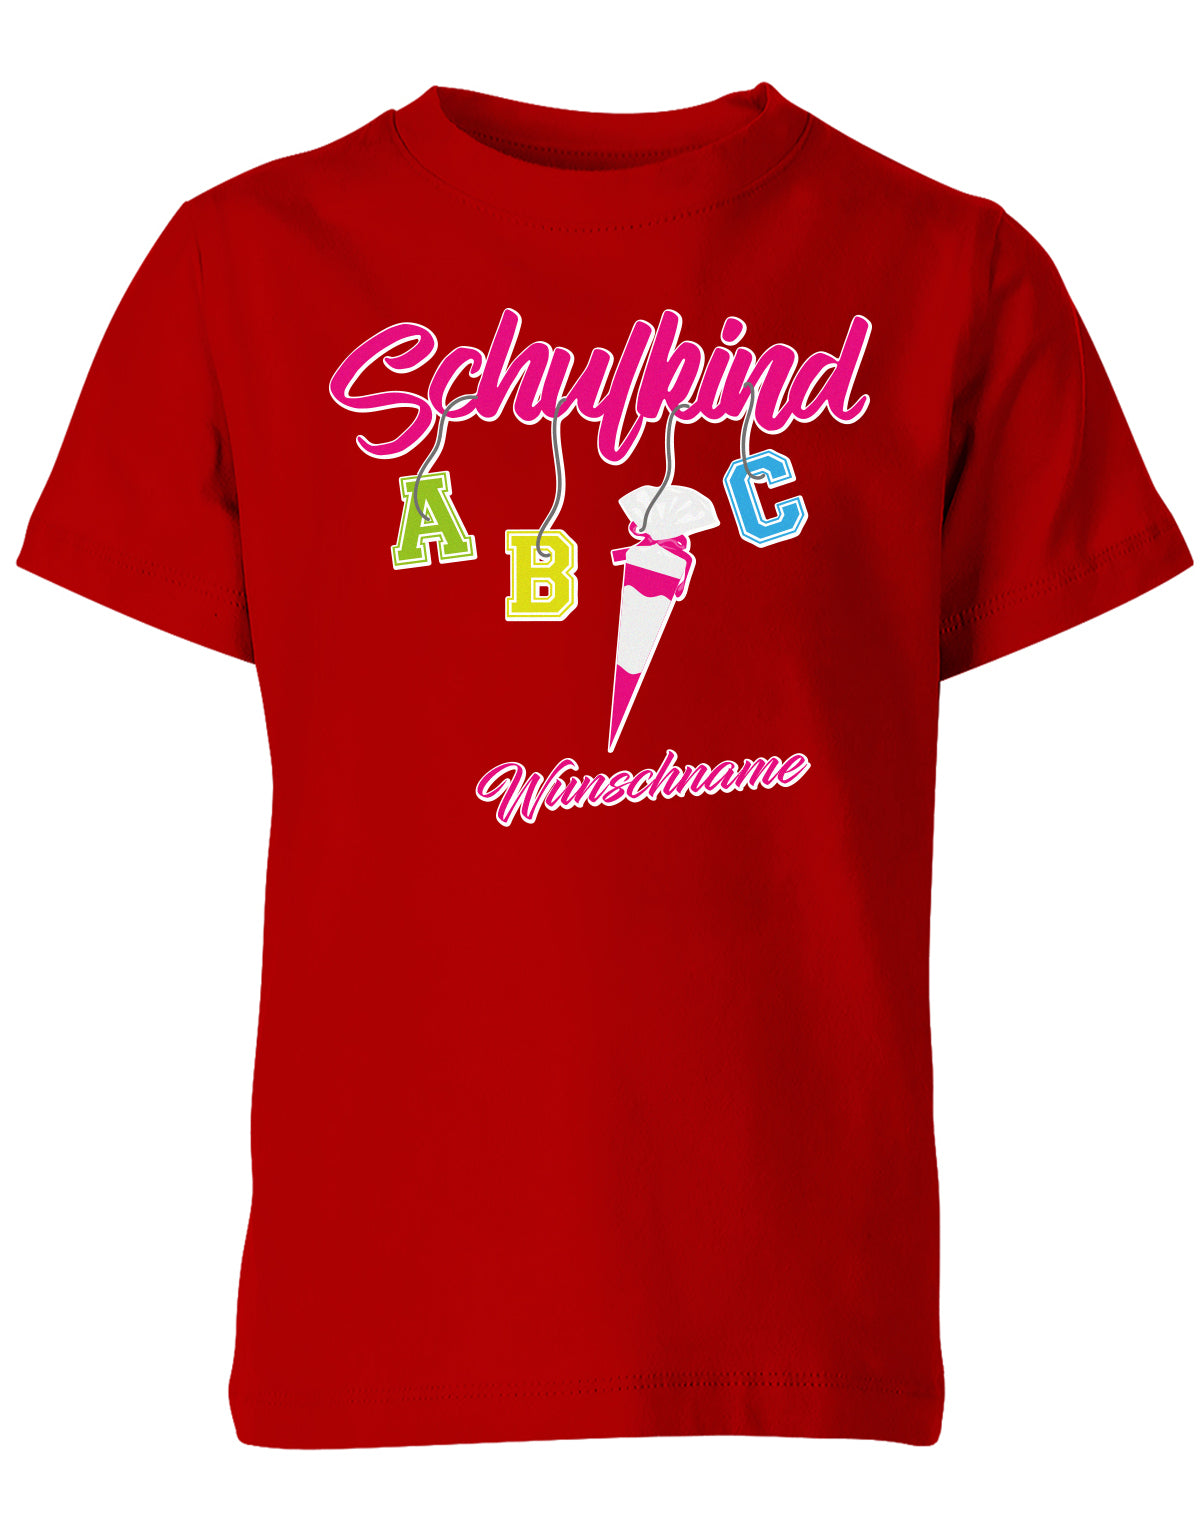 Schulkind ABC Schultüte Wunschname Blau oder Pink Einschulung Kinder T-Shirt Rot Pink